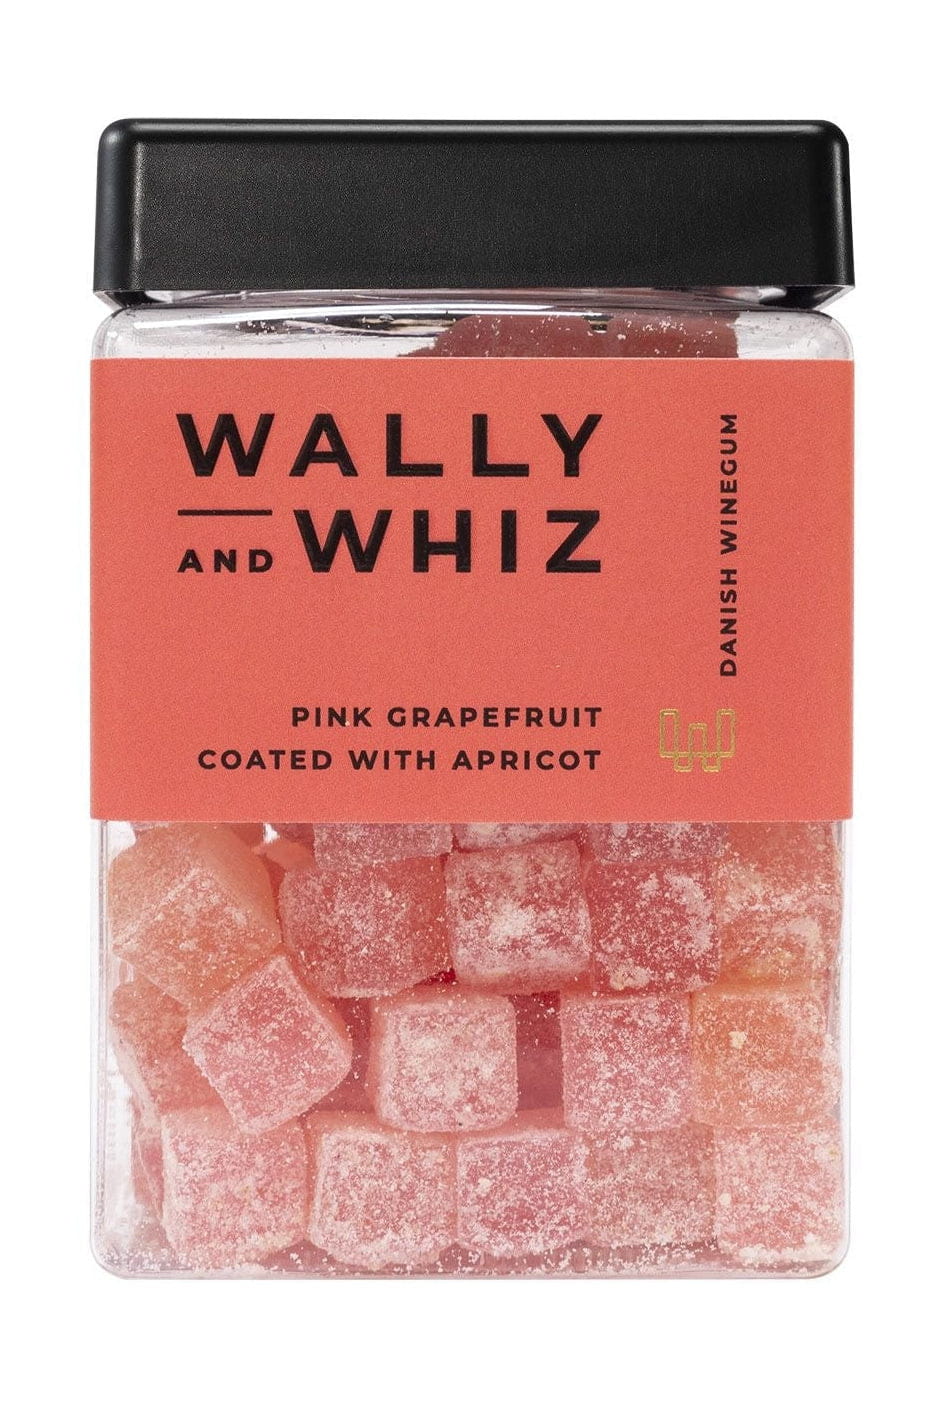 Wally And Whiz Wijngomkubus, roze grapefruit met abrikozen, 240 g